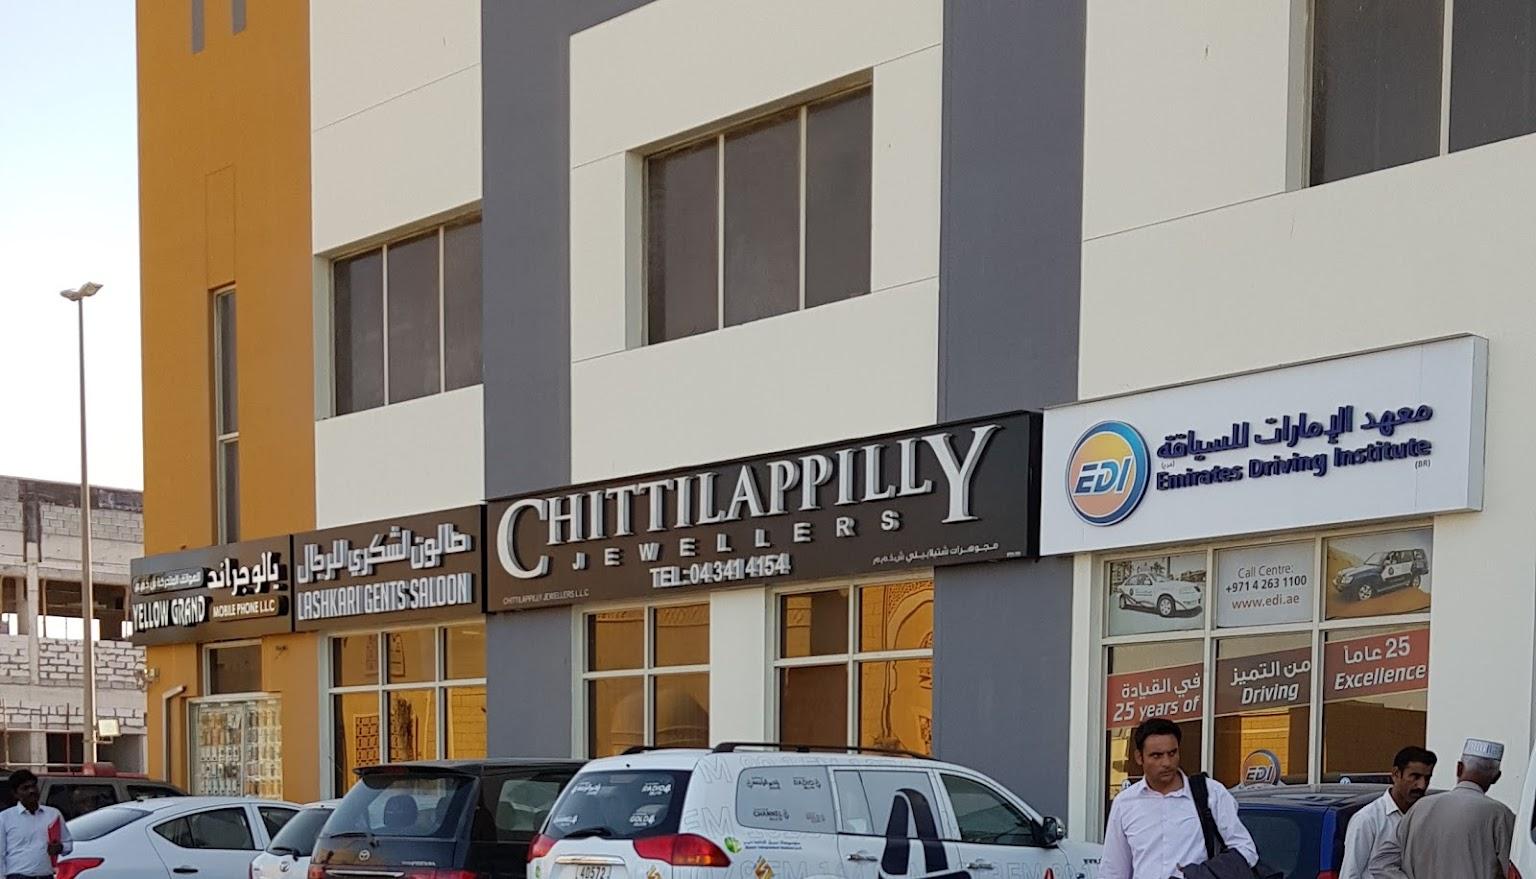 chittilappilly